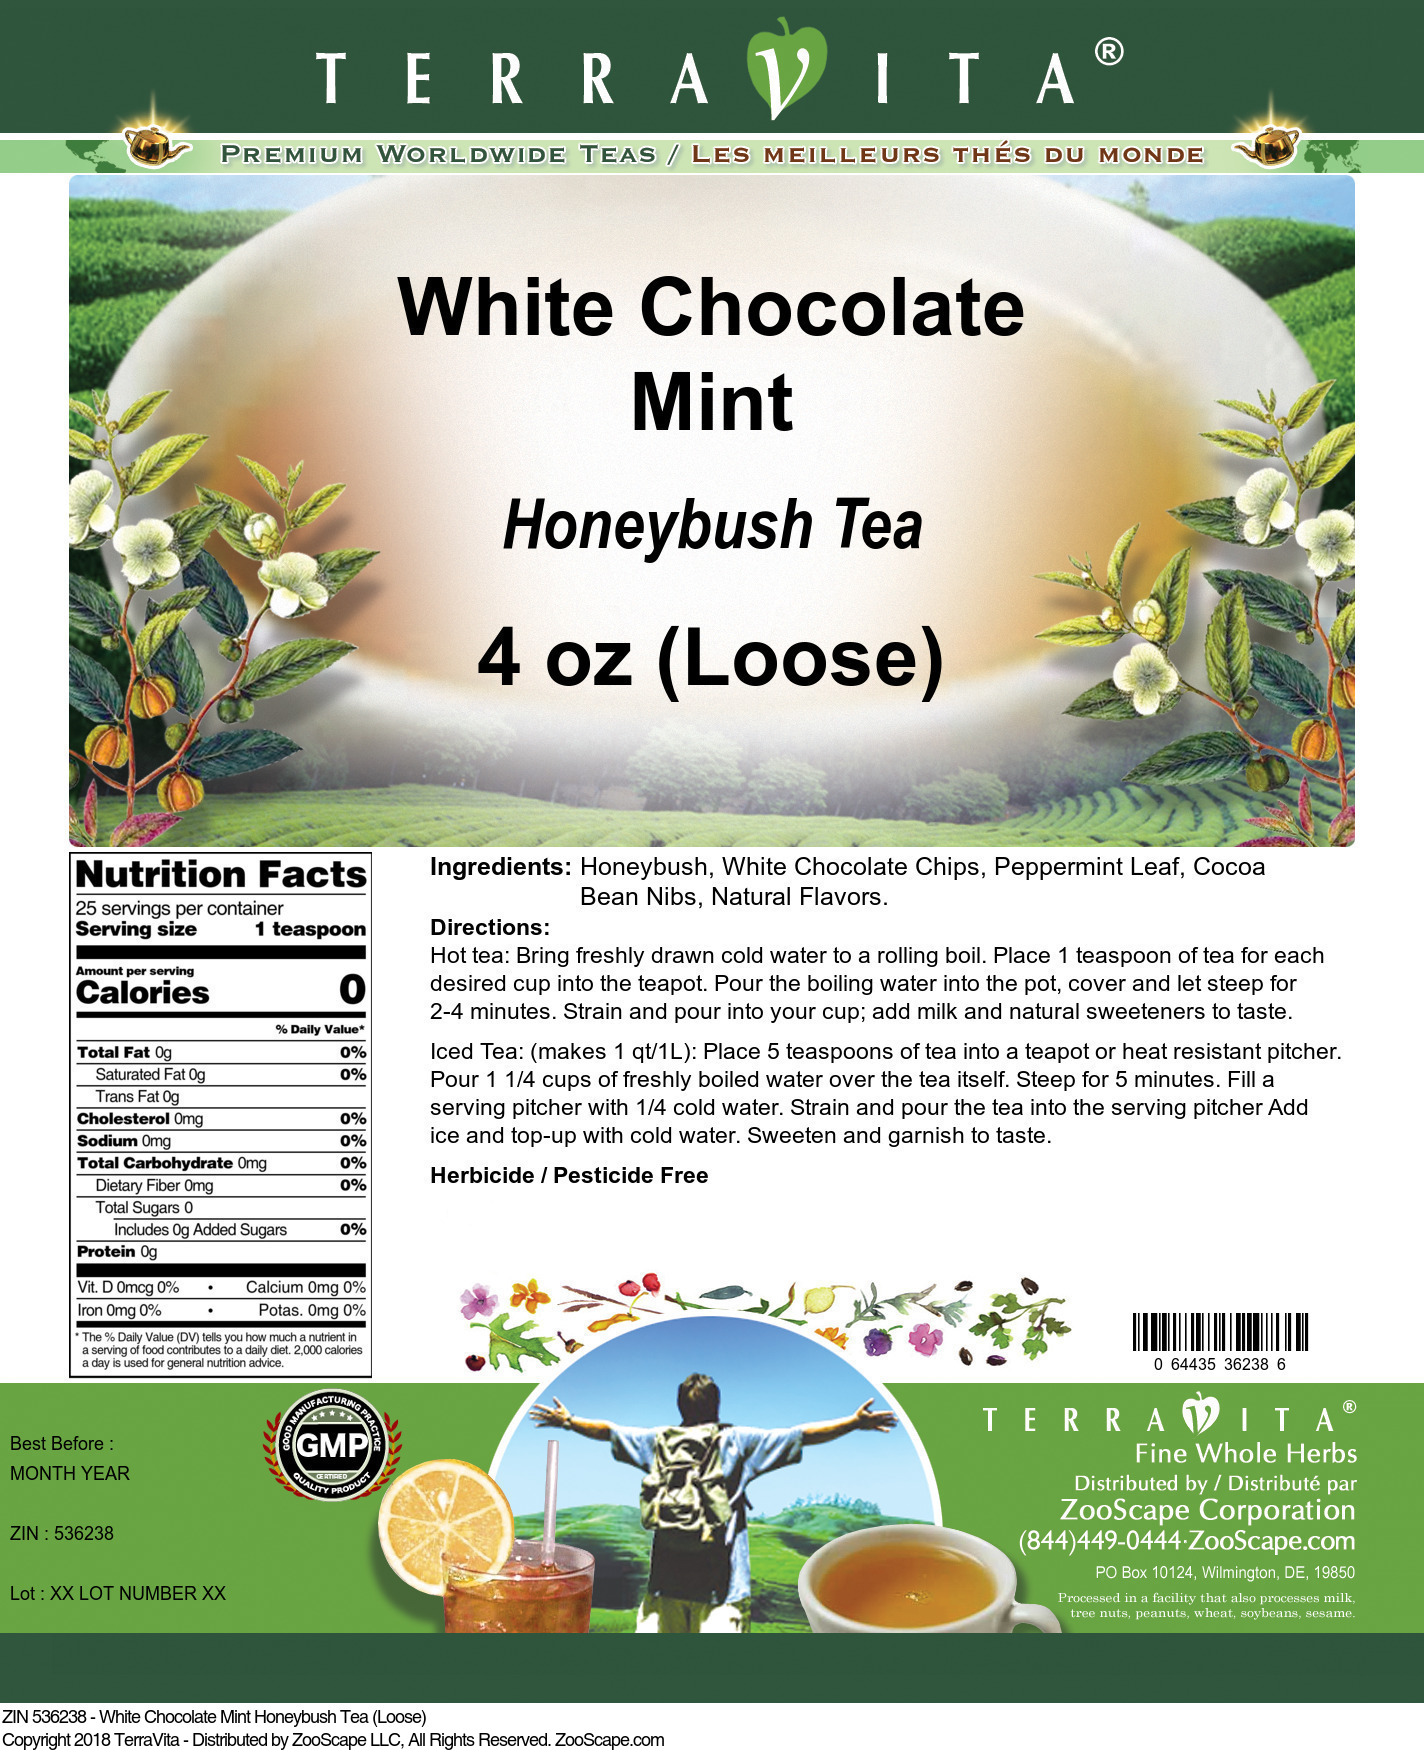 White Chocolate Mint Honeybush Tea (Loose) - Label